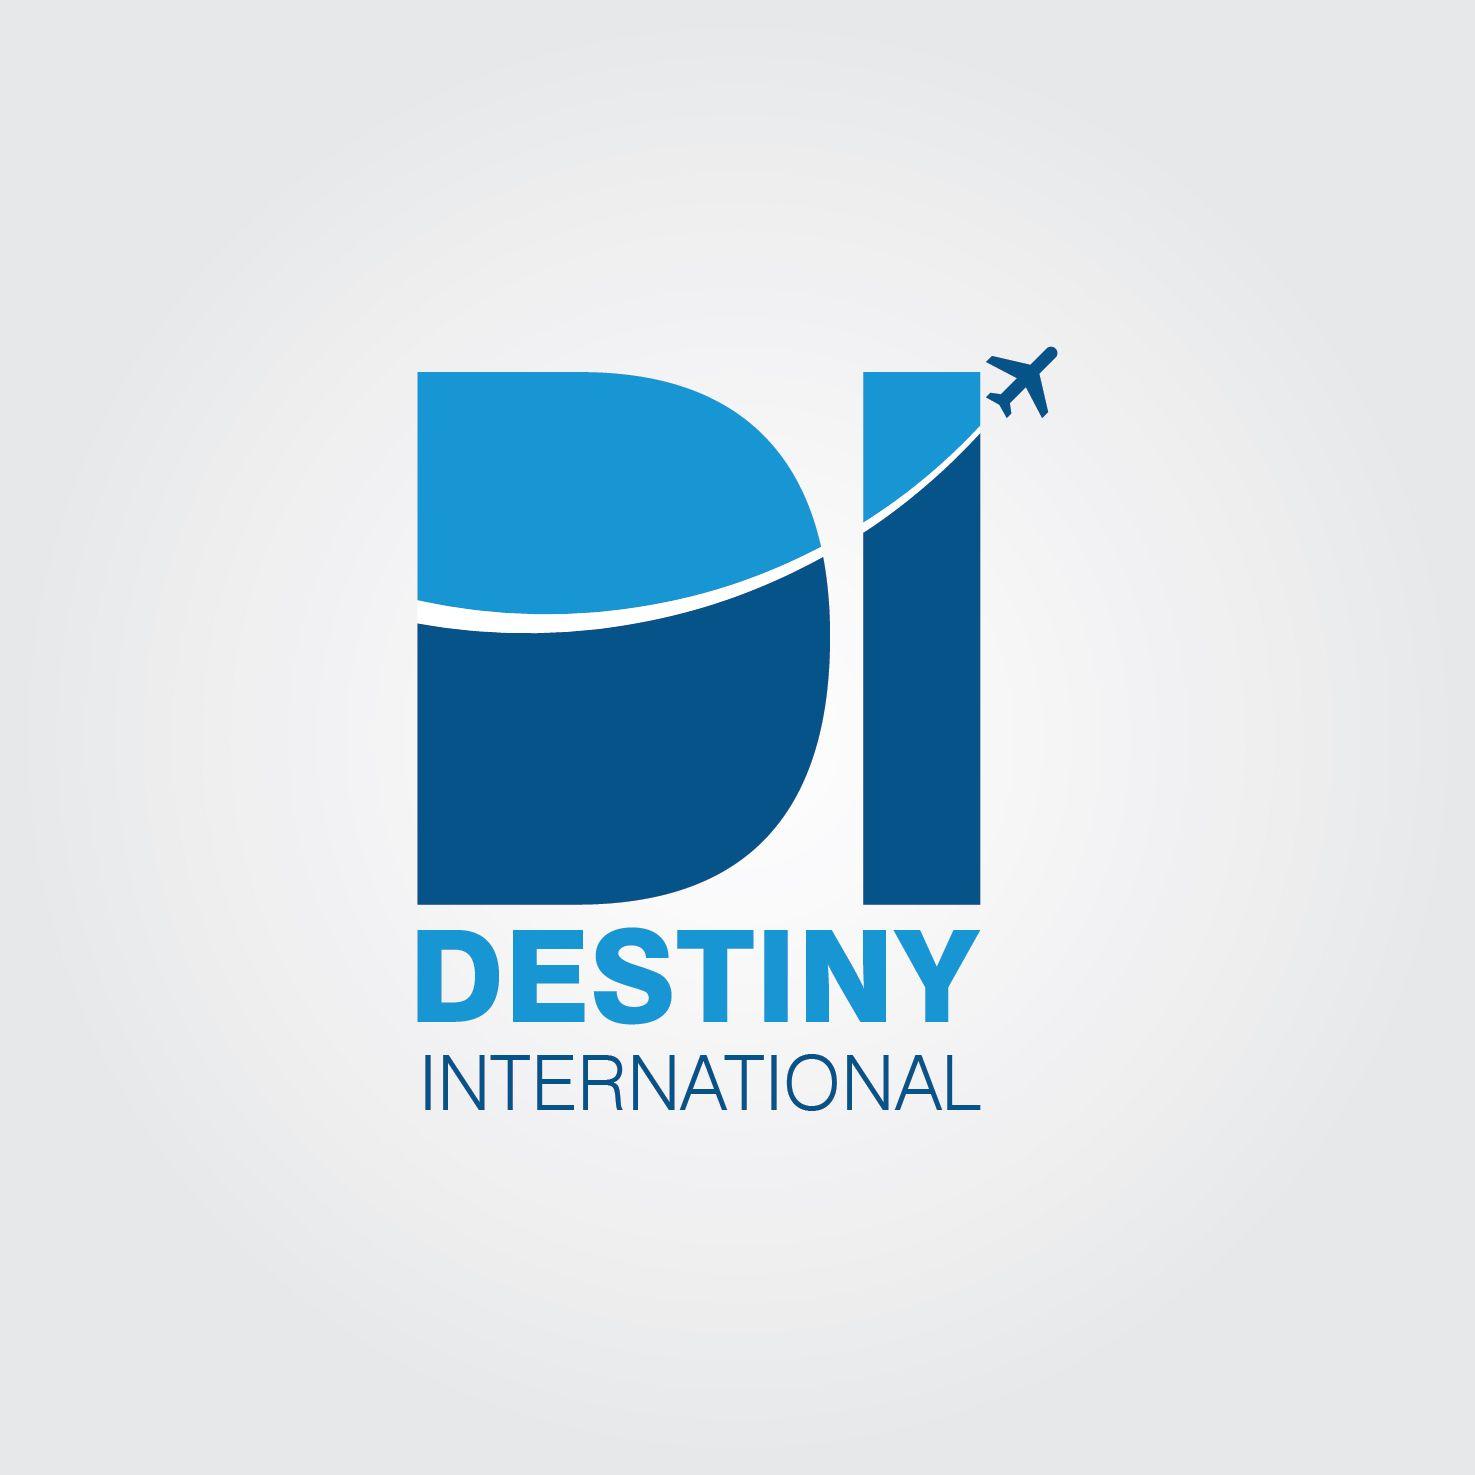 International Logo - Destiny International Logo Design - Neel GraphicsNeel Graphics